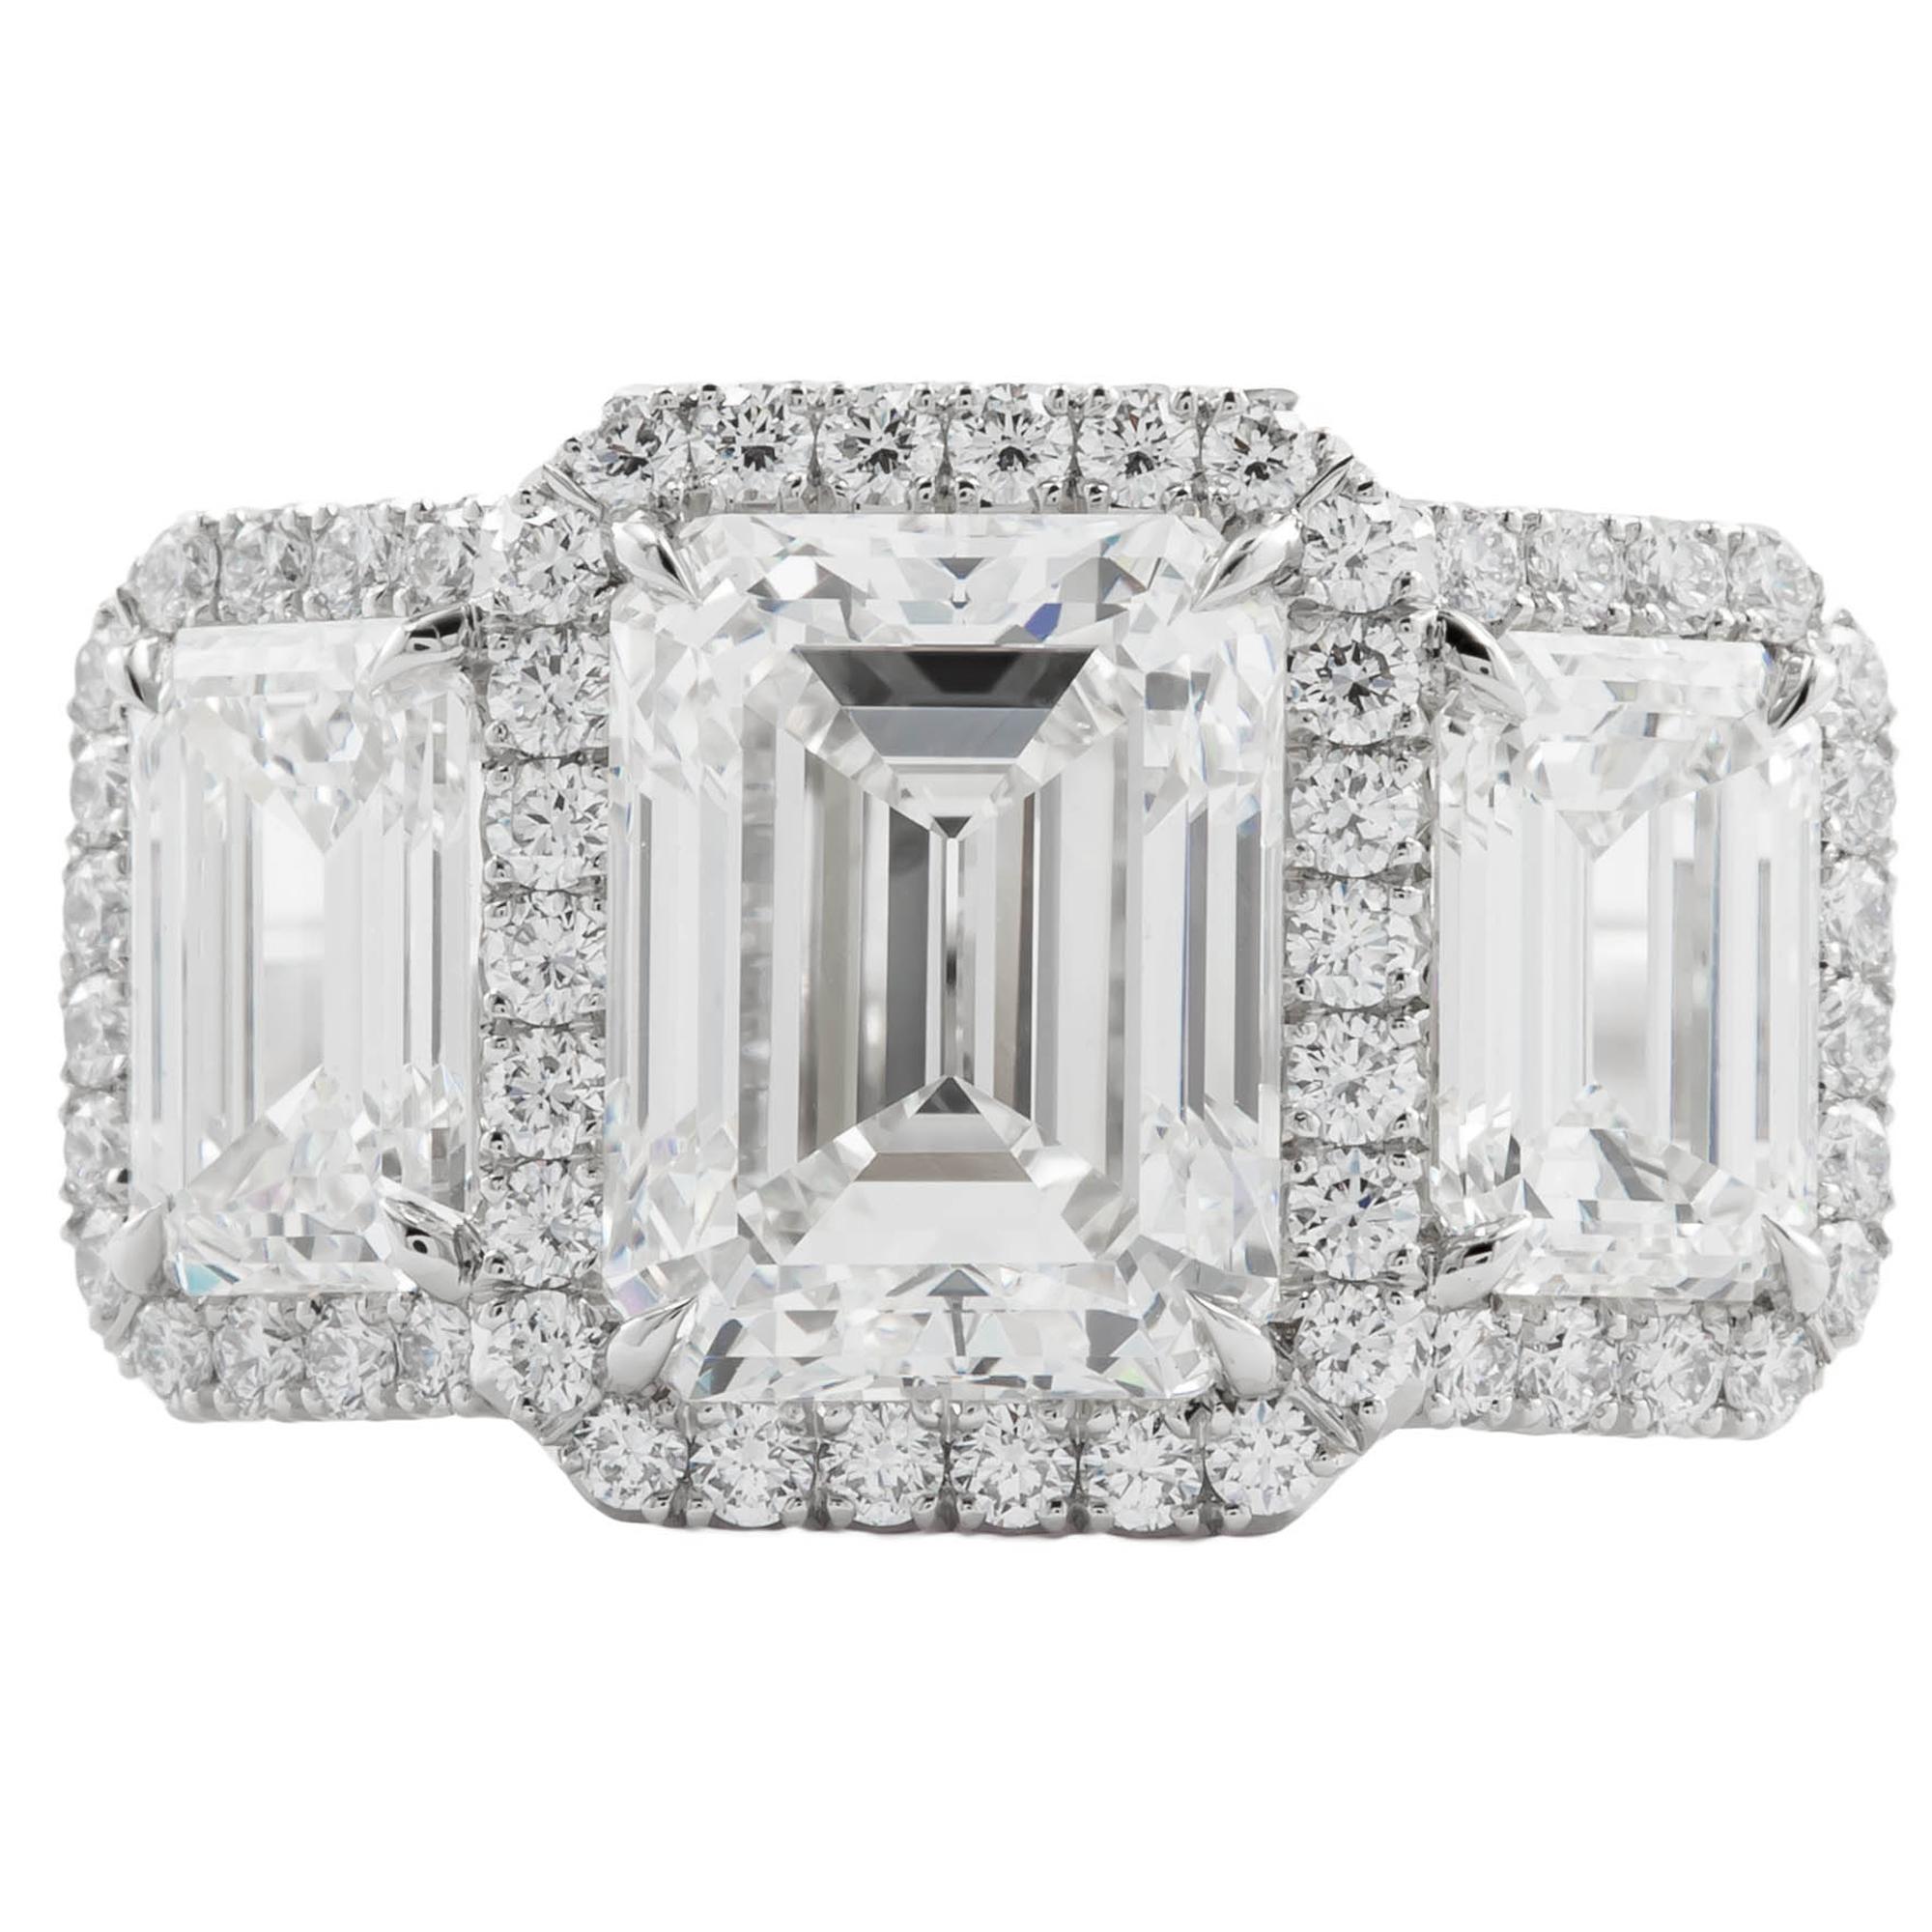 5.31 Carat Three-Stone Emerald Cut Diamond Ring Platinum For Sale